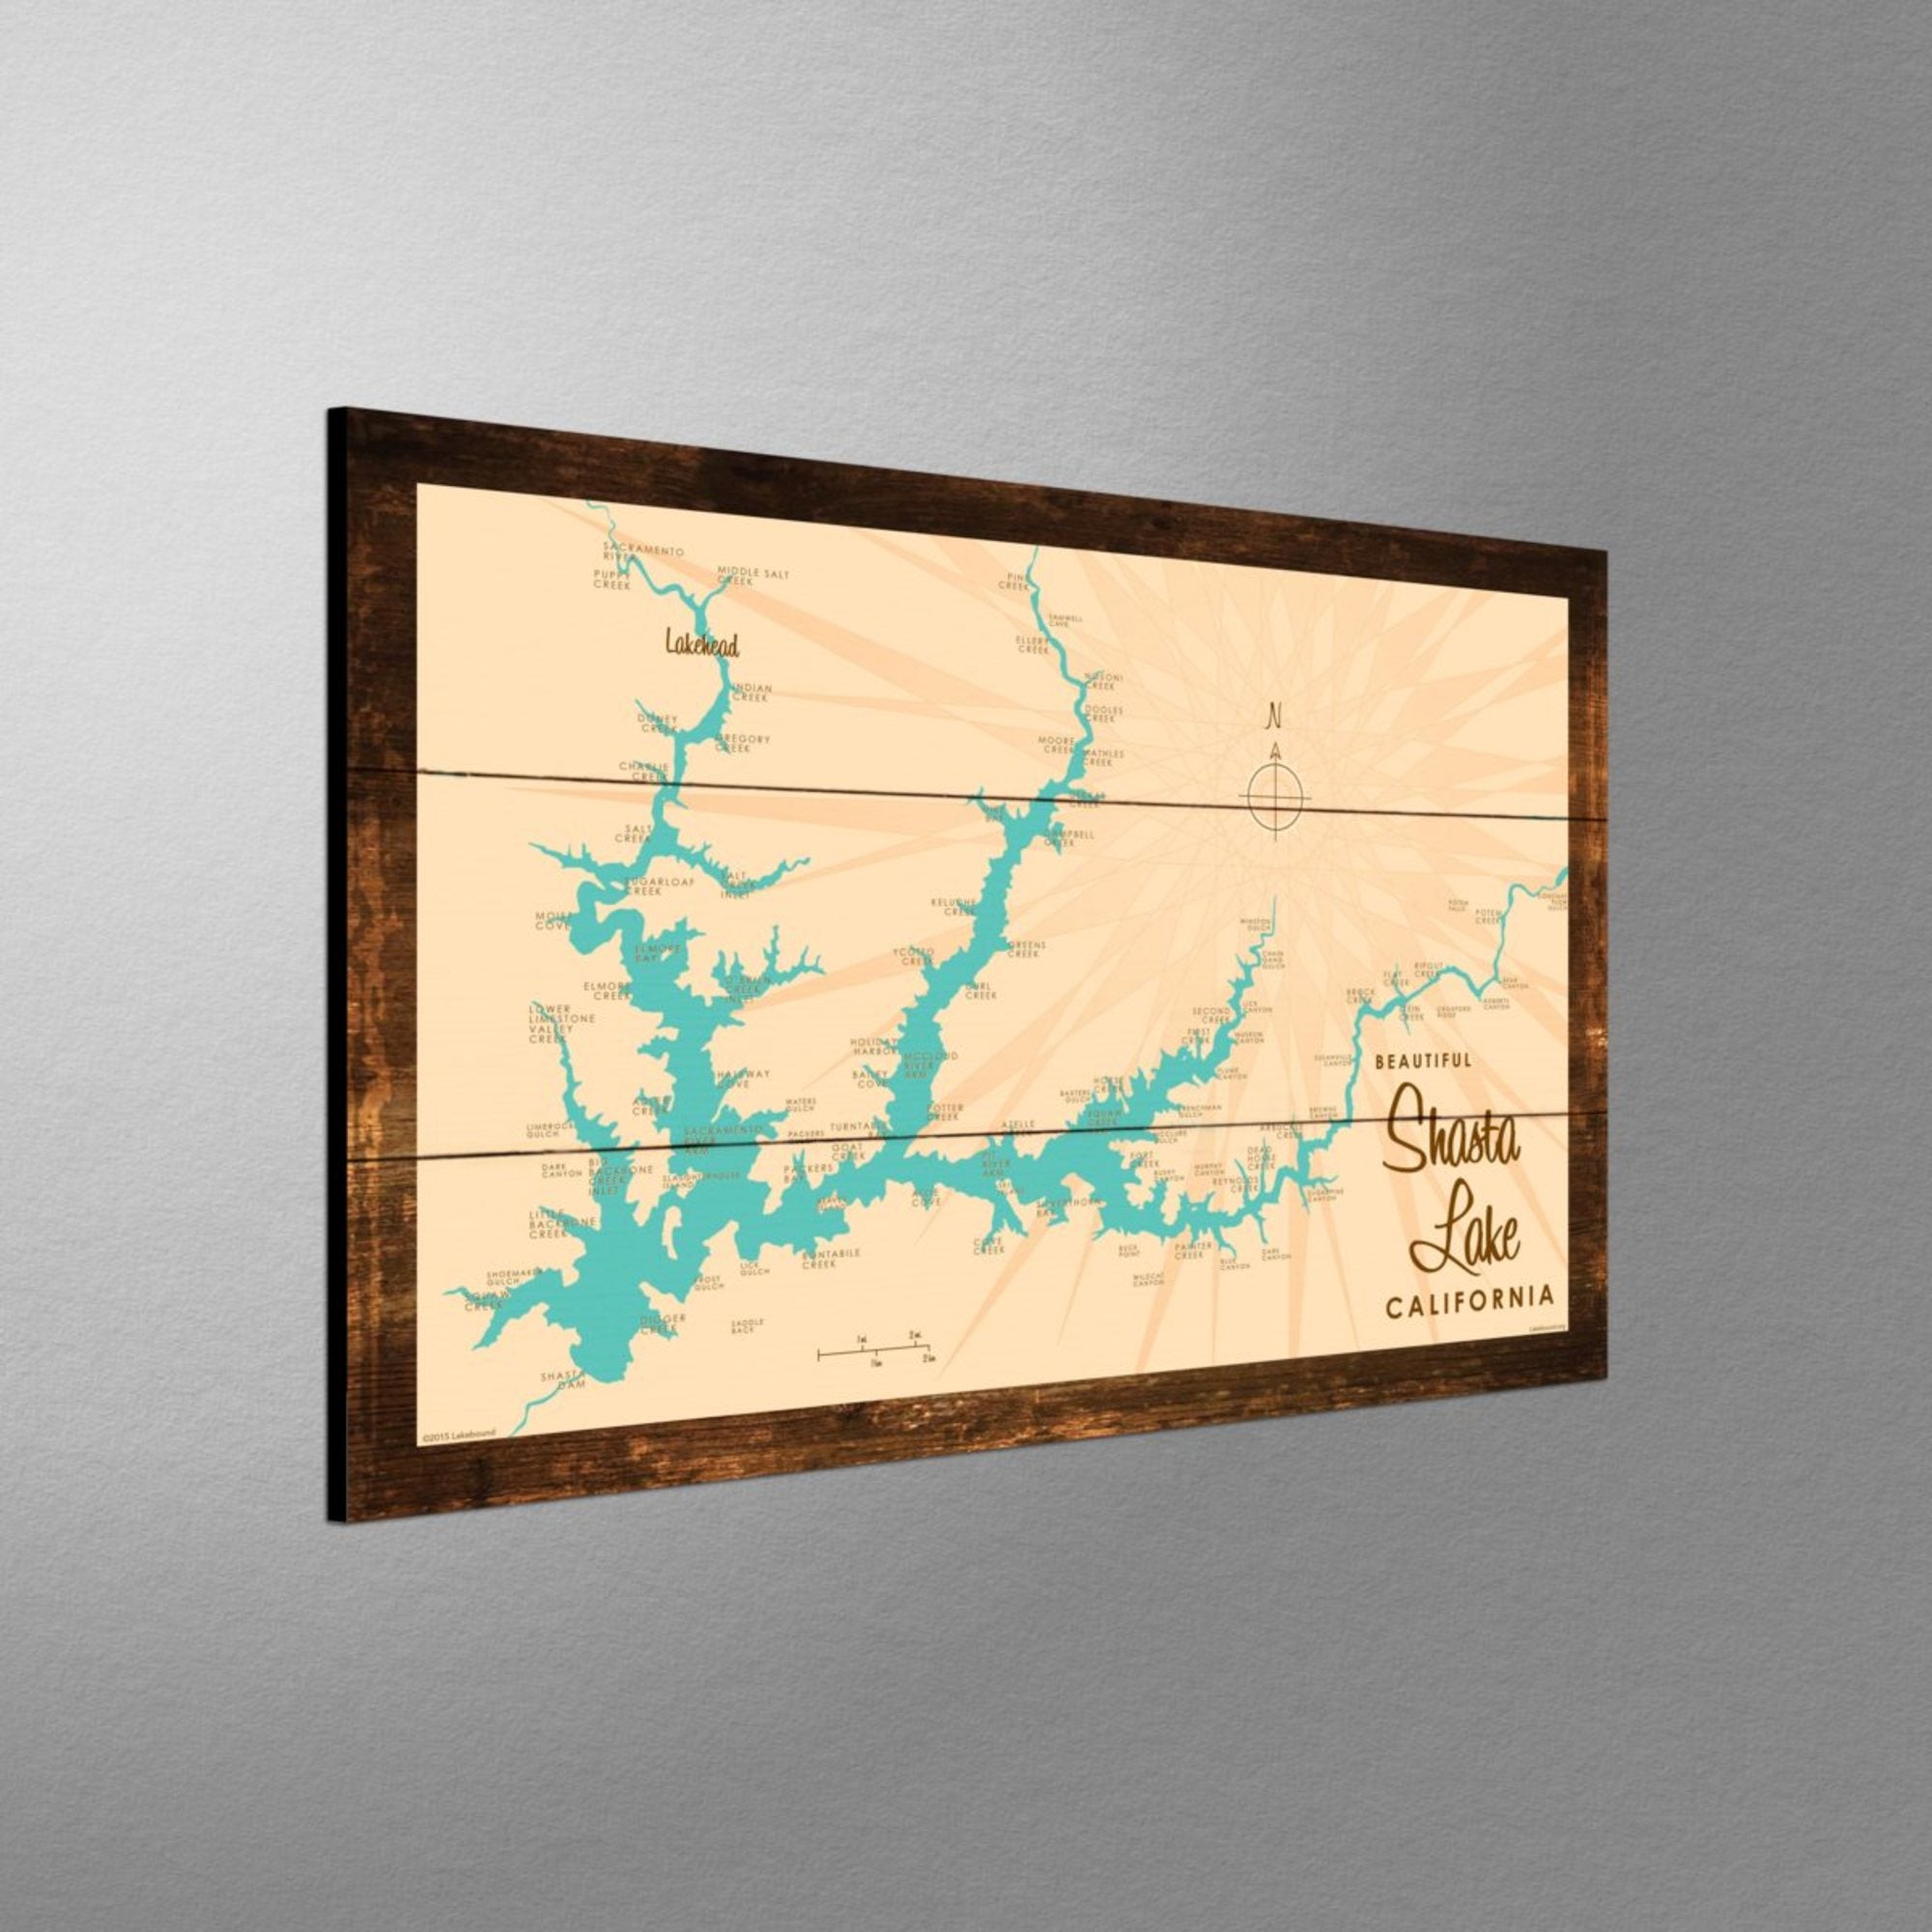 Shasta Lake California, Rustic Wood Sign Map Art